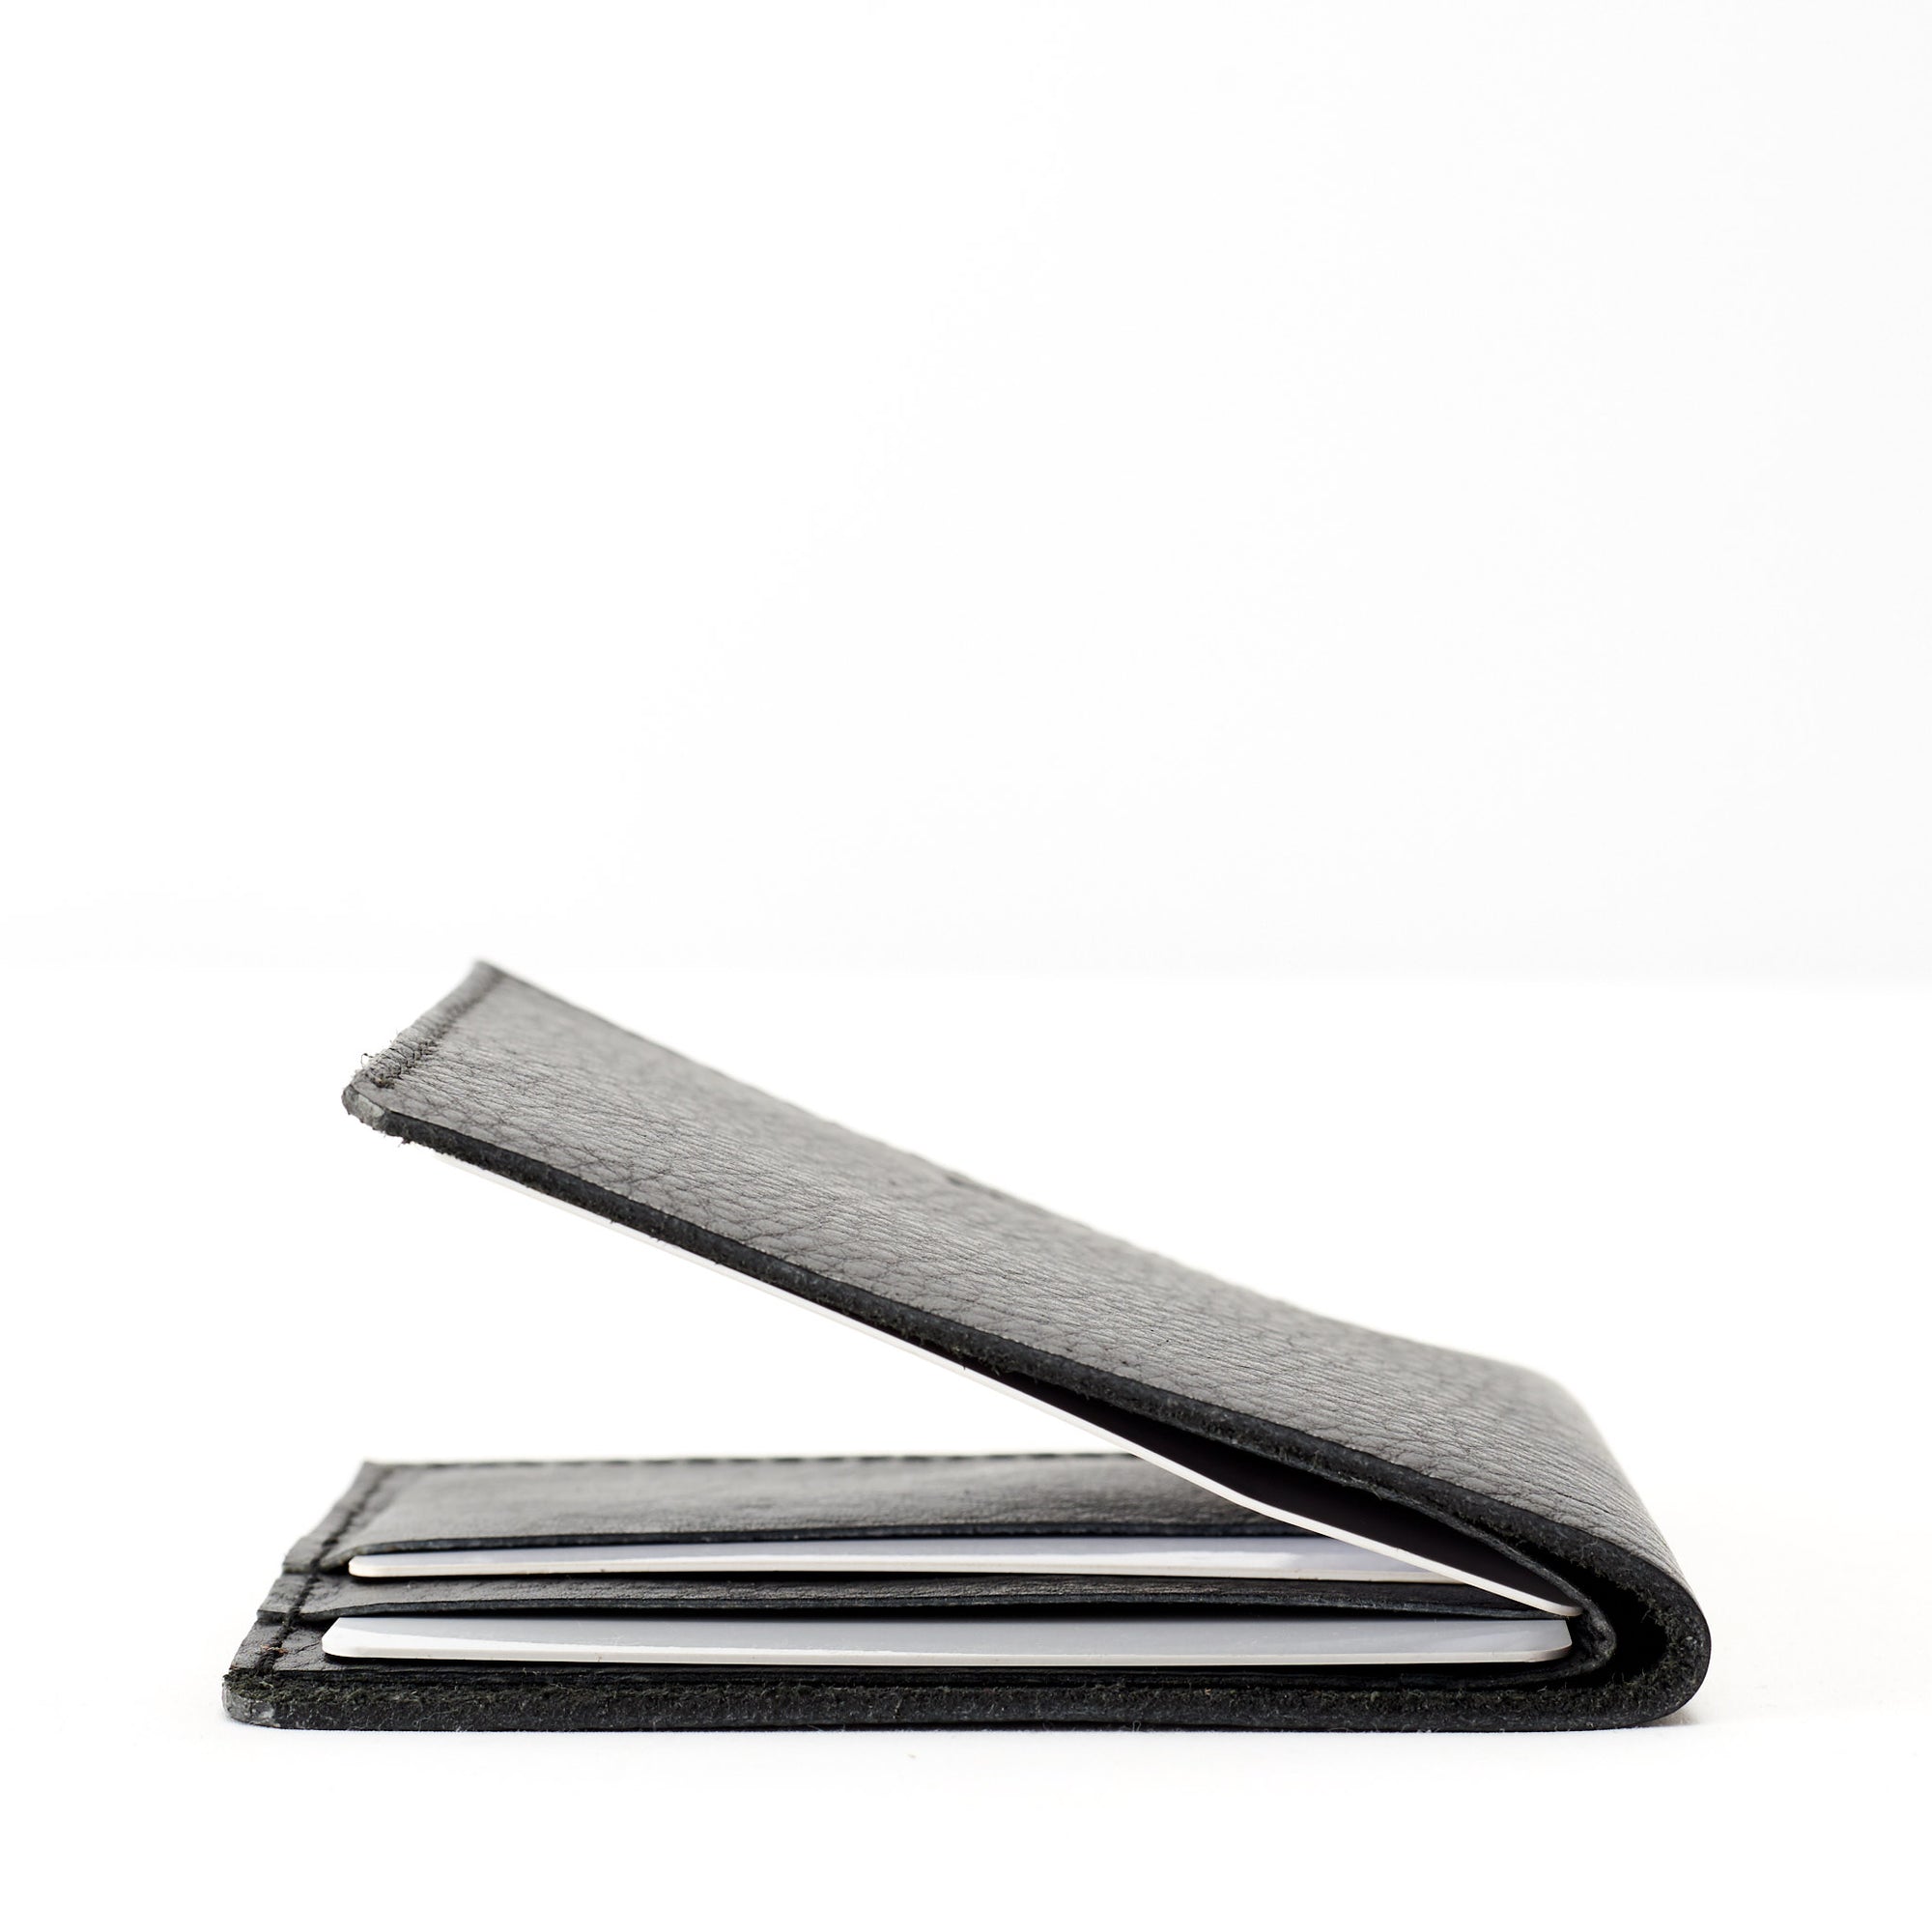 Black leather slim wallet gifts for men handmade accessories. Designer bifold wallet for mens gifts